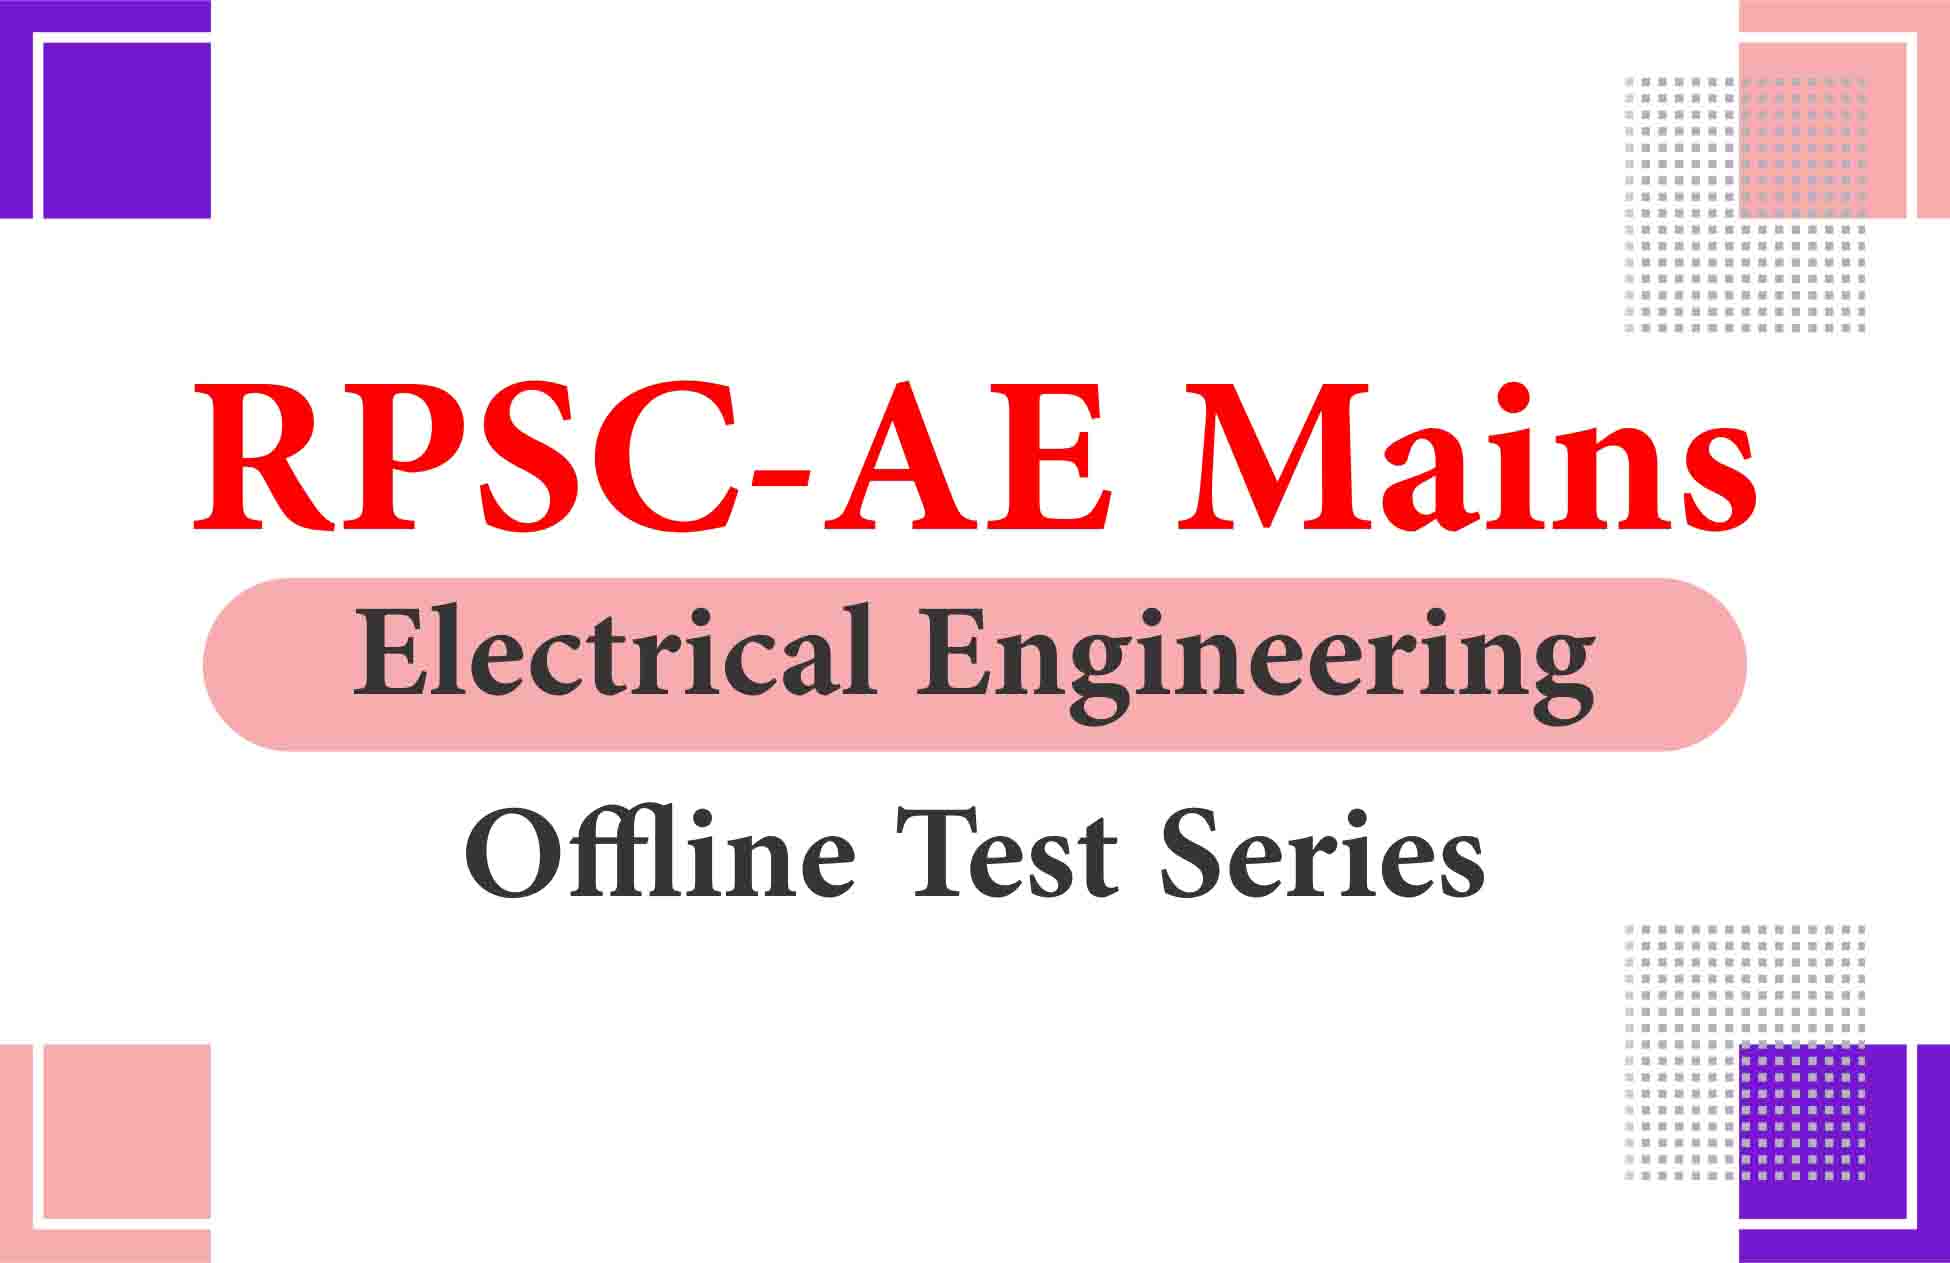 RPSC-AE Mains Electrical Engineering Offline Test Series